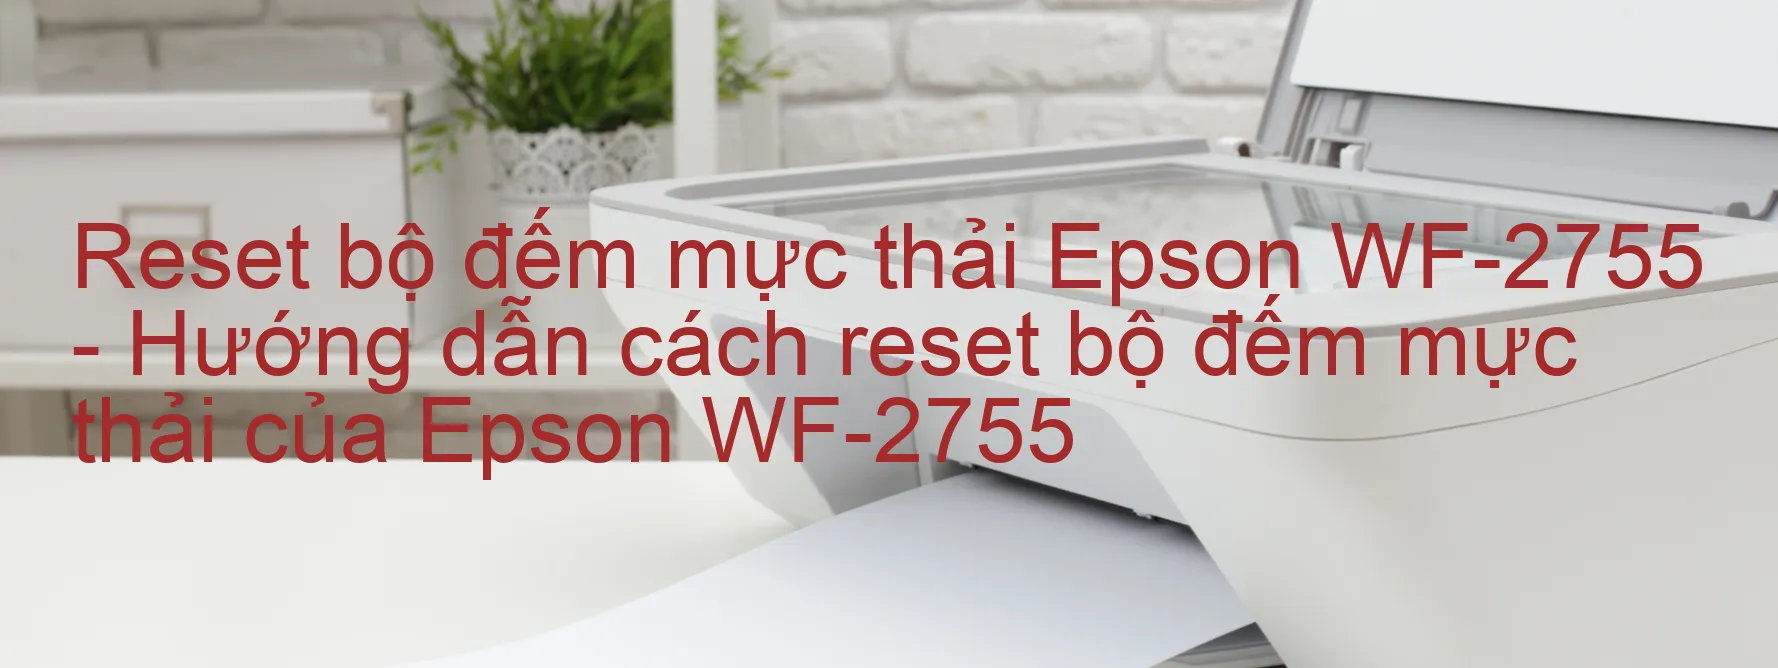 Reset bộ đếm mực thải Epson WF-2755 - Hướng dẫn cách reset bộ đếm mực thải của Epson WF-2755